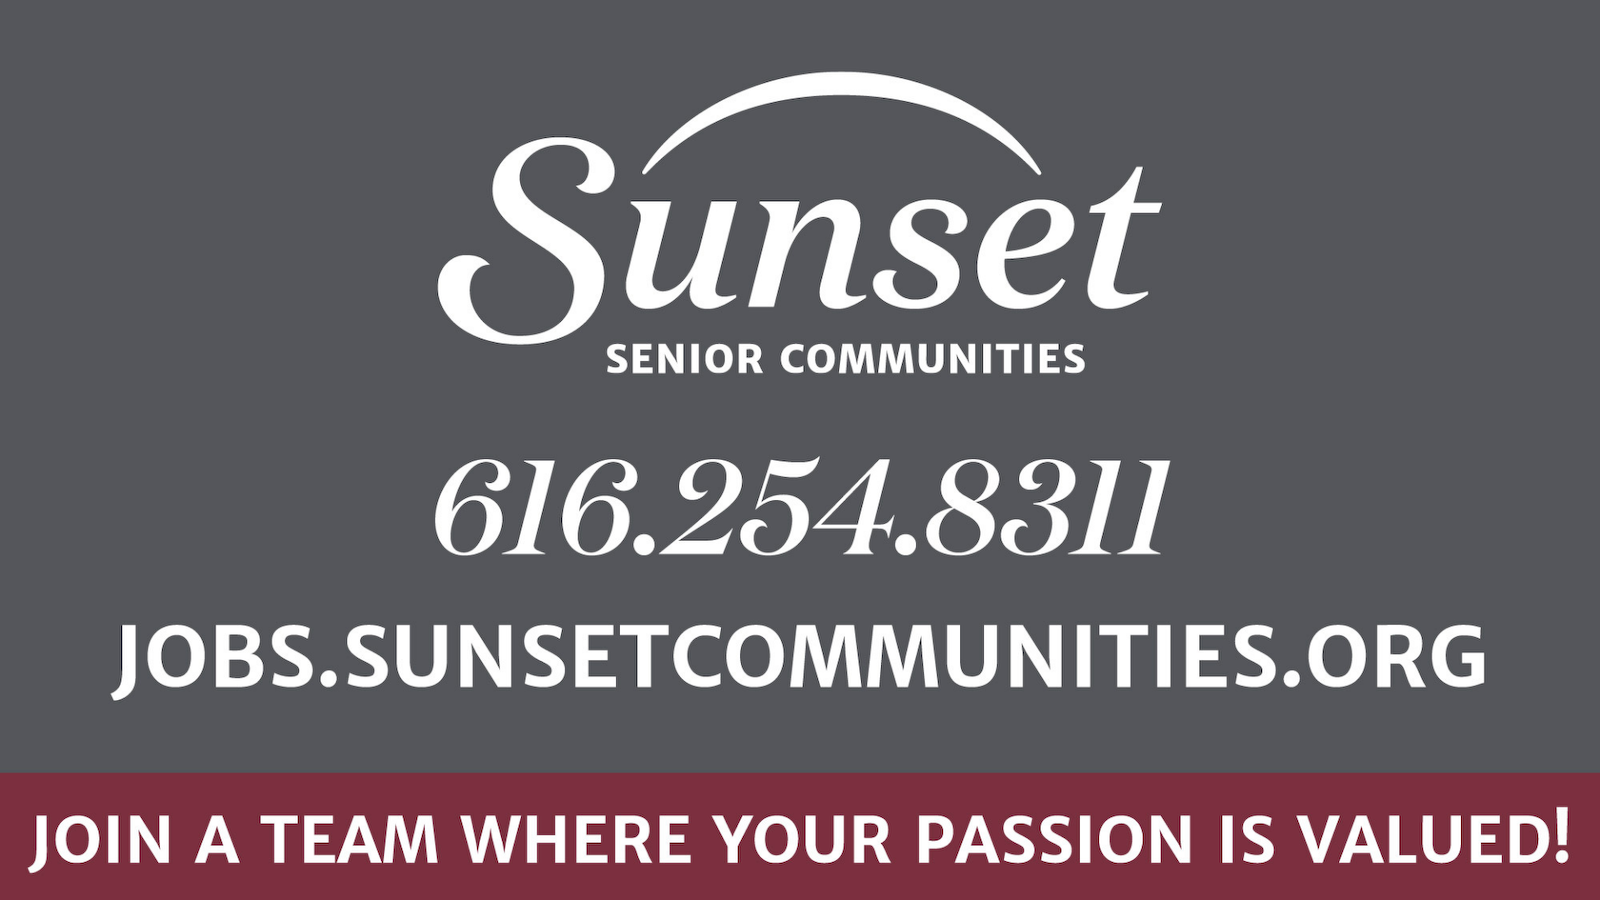 Sunset Senior Communities